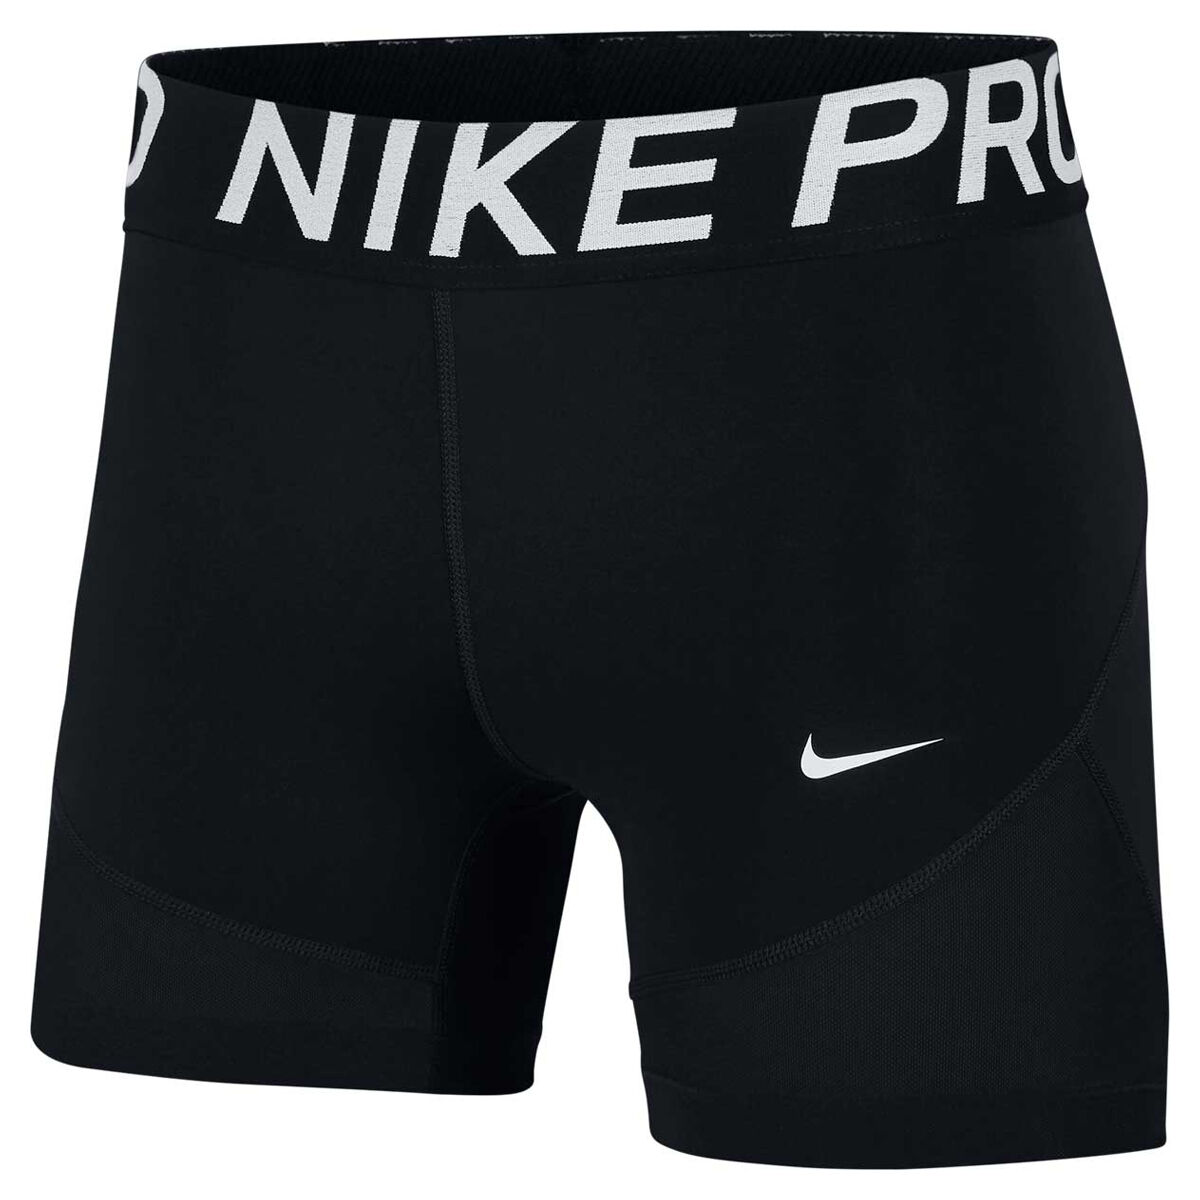 nike pro shorts xxl